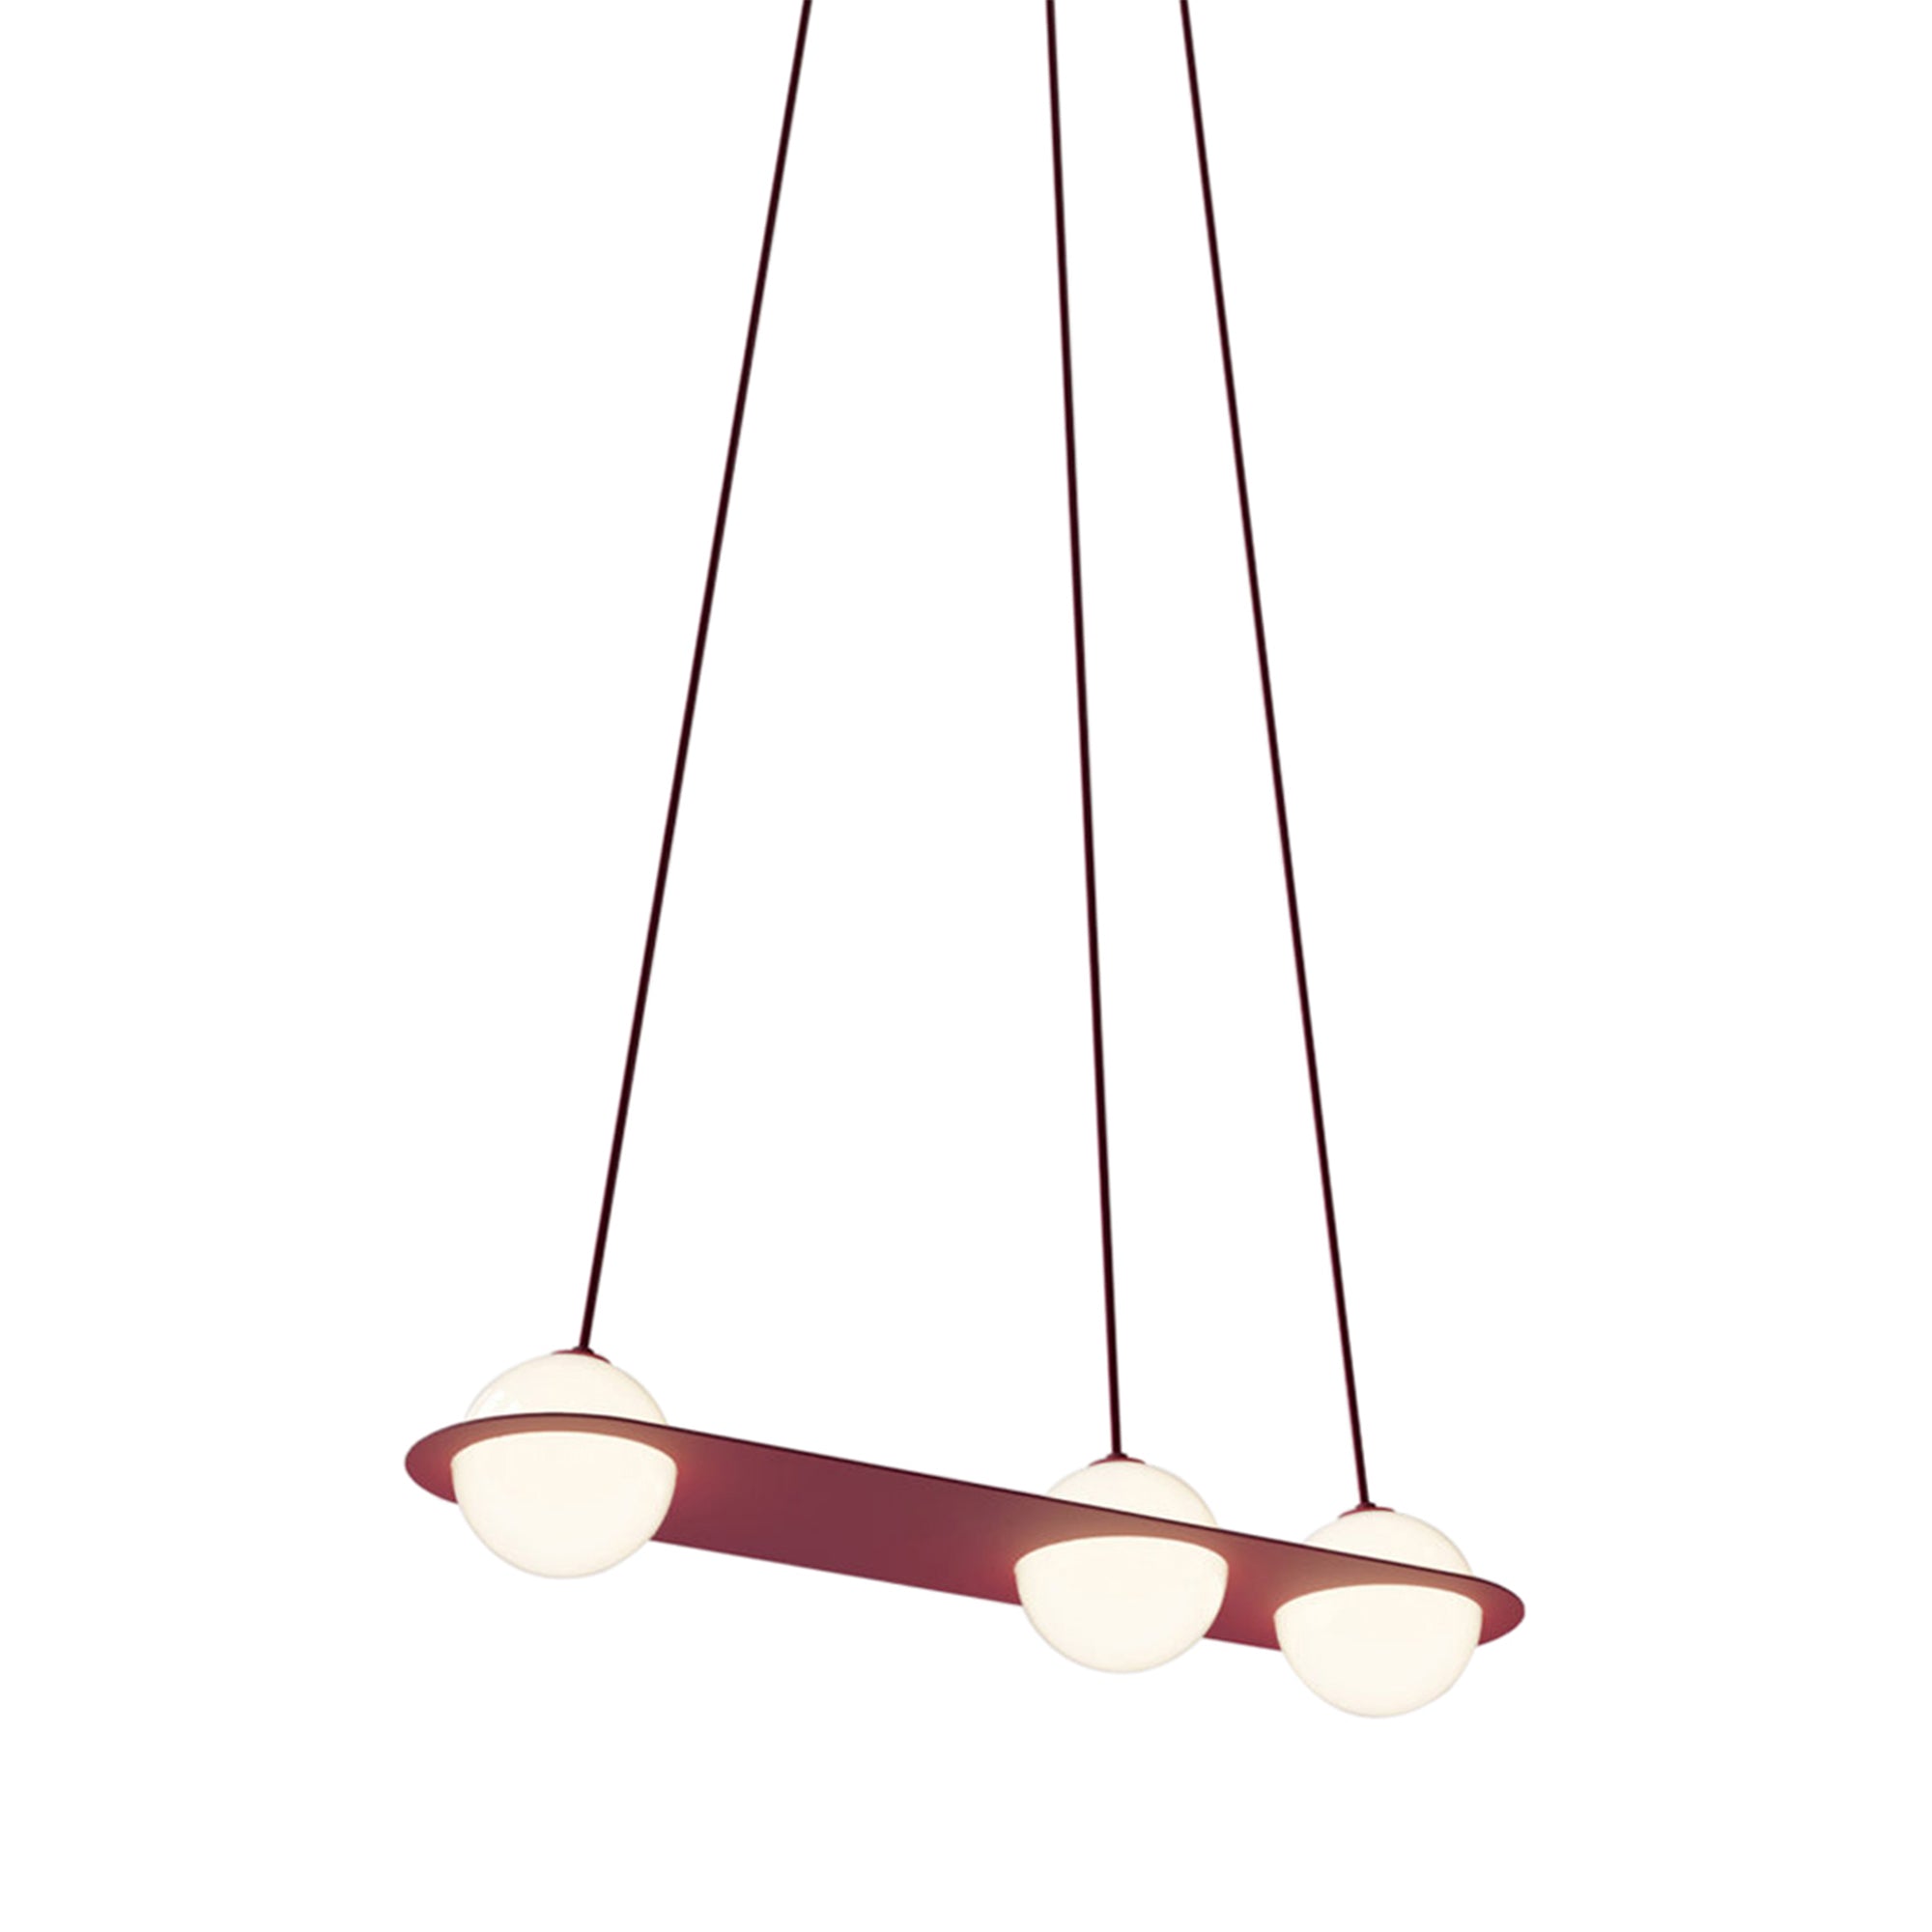 Laurent 07 Suspension Lamp: Burgundy + Burgundy + Angled Wires